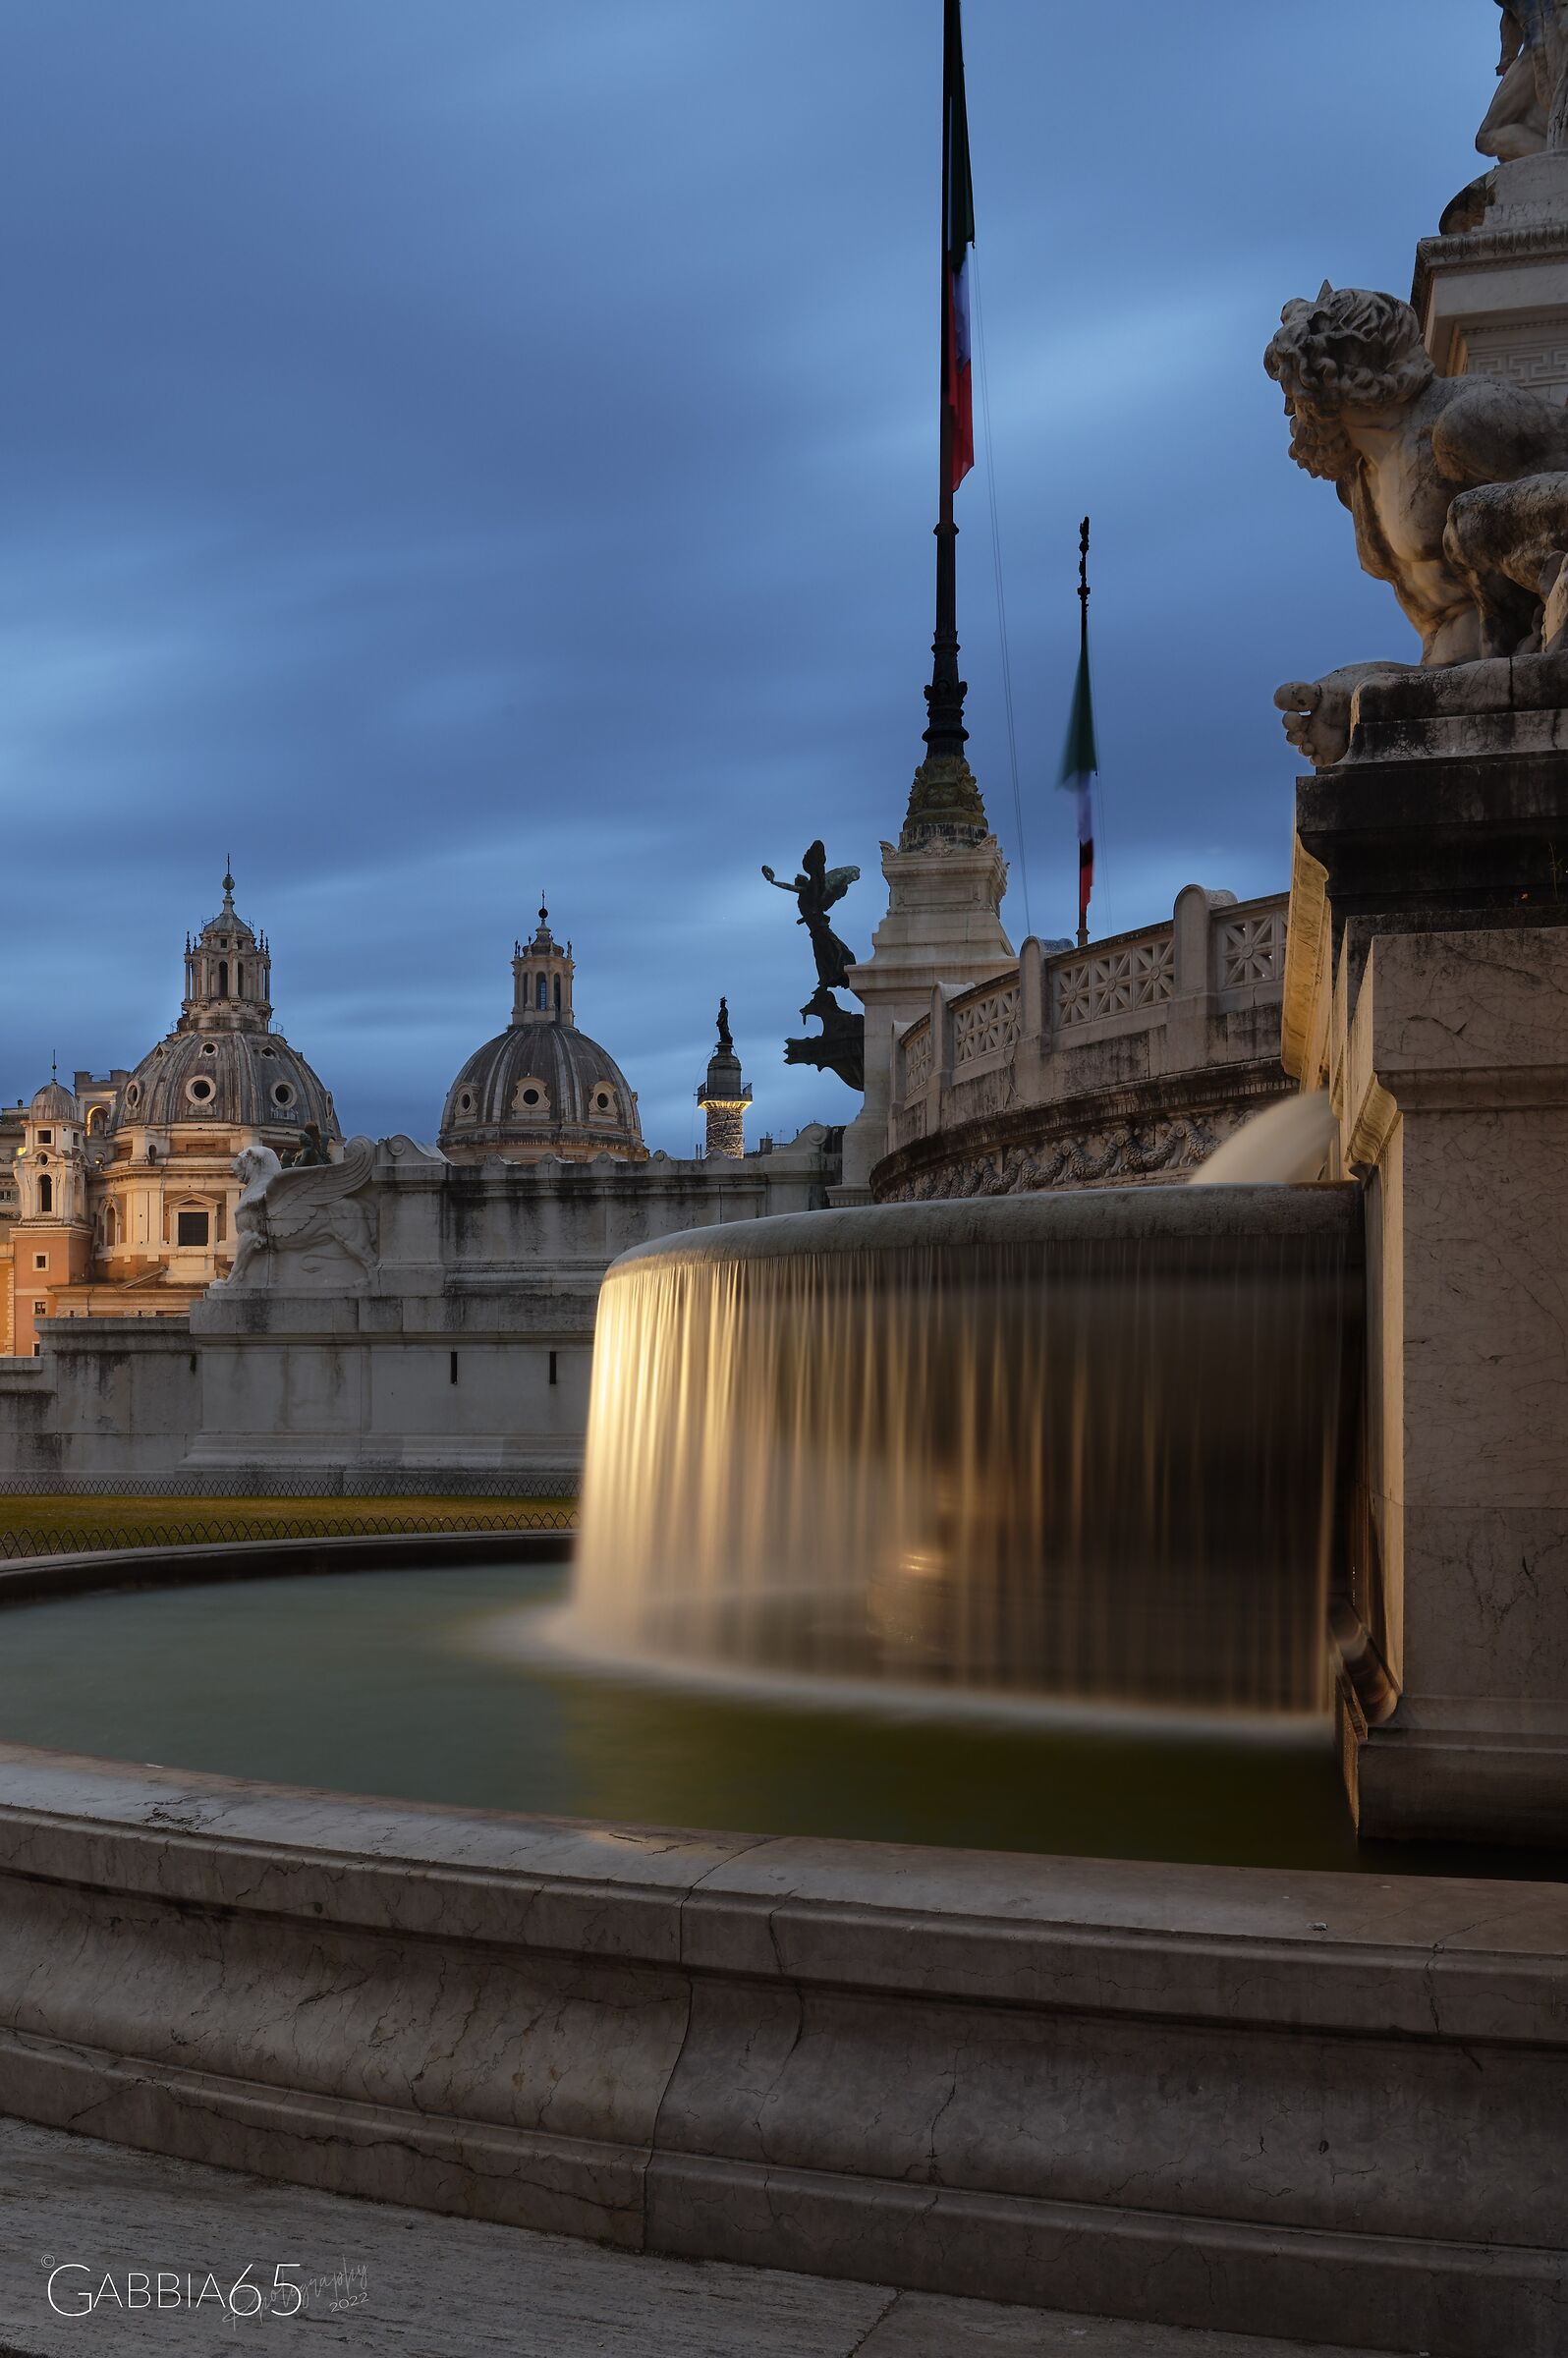 Tyrrhenian Fountain (Vittoriano, Rome)...